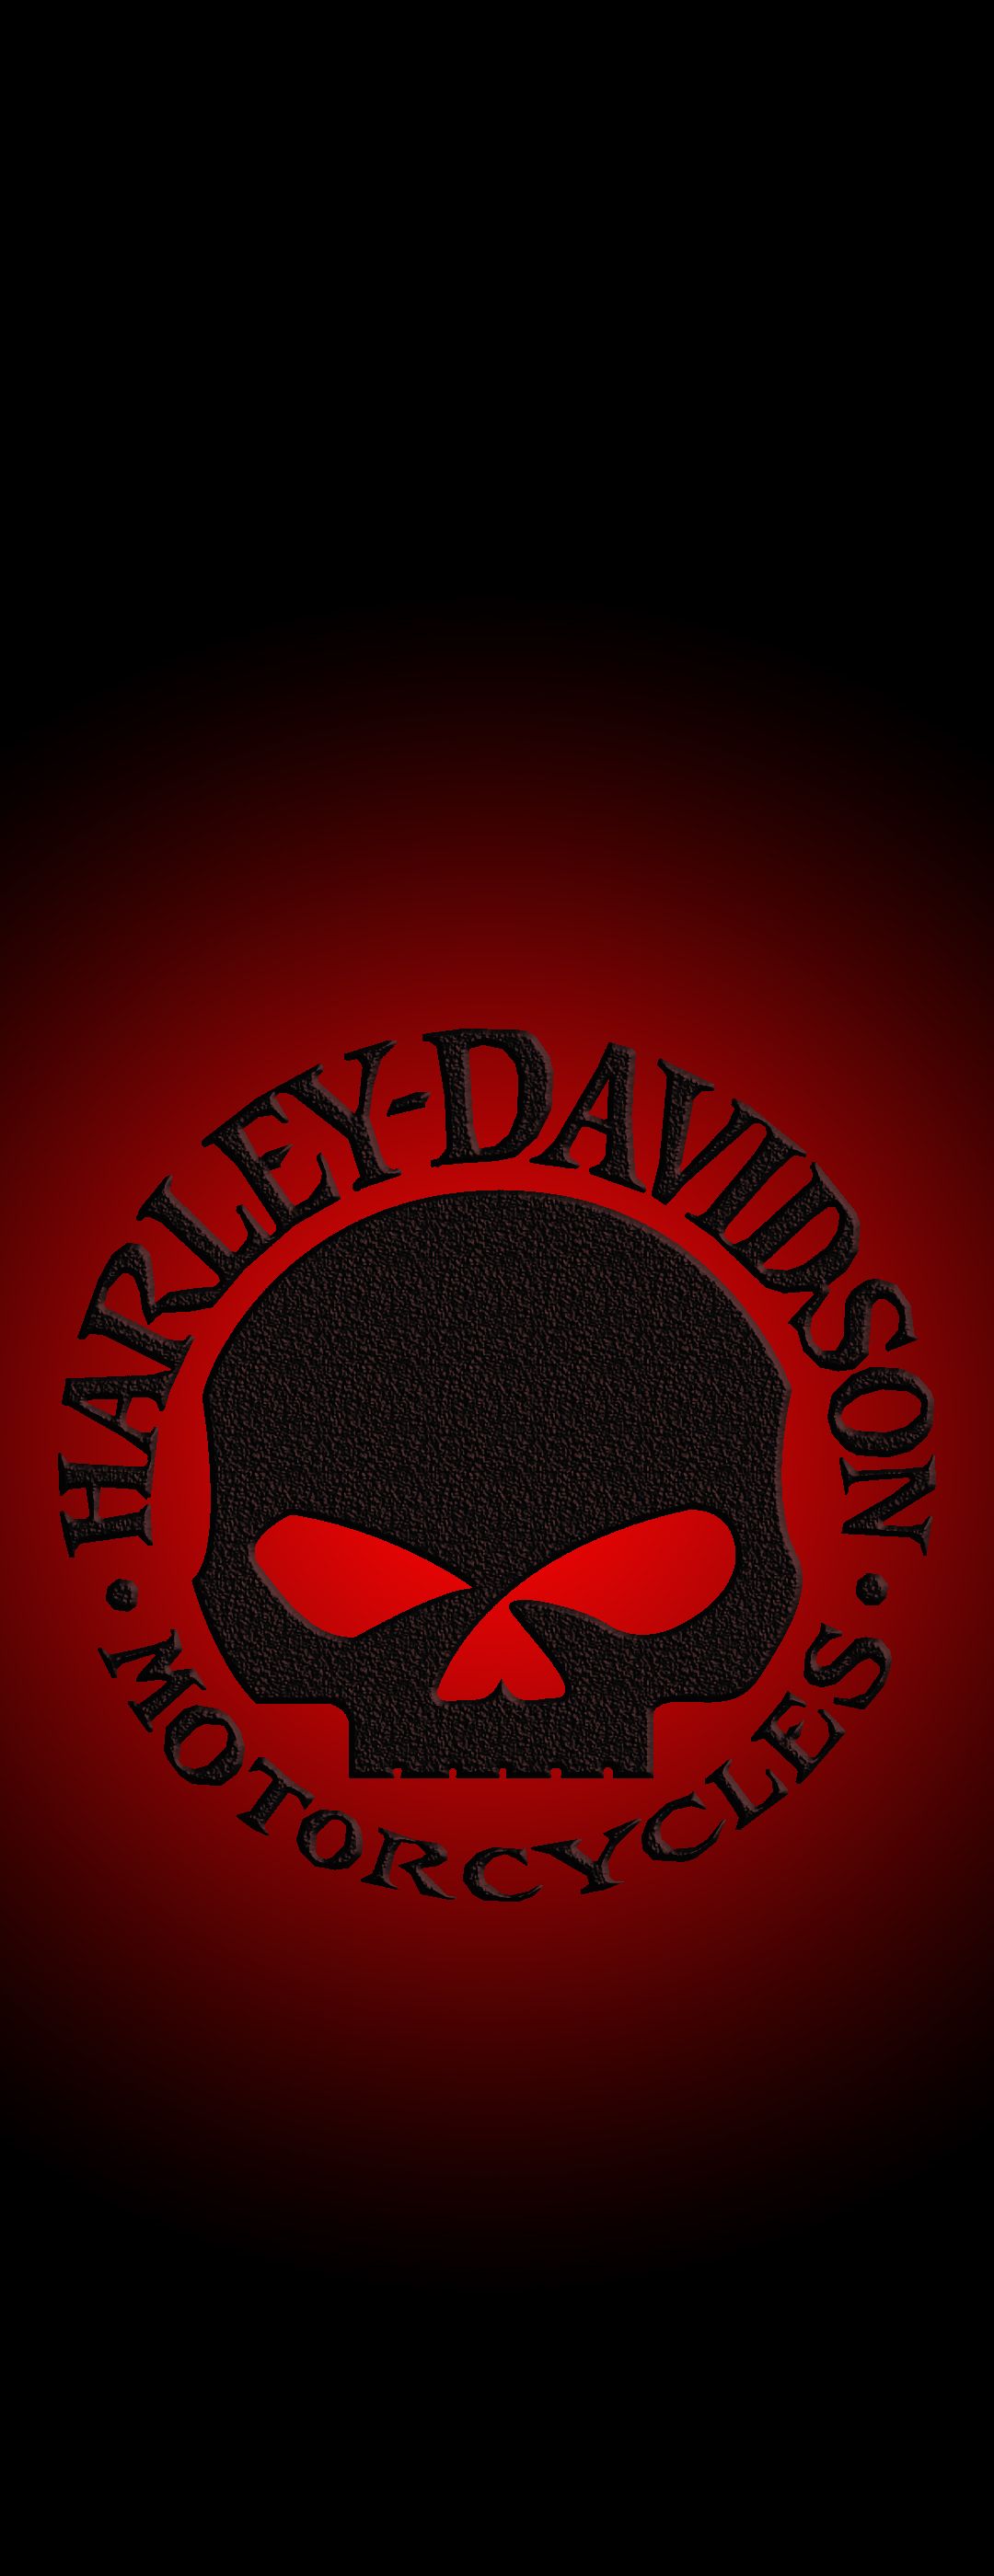 Harley Davidson iPhone Wallpapers - Wallpaper Cave